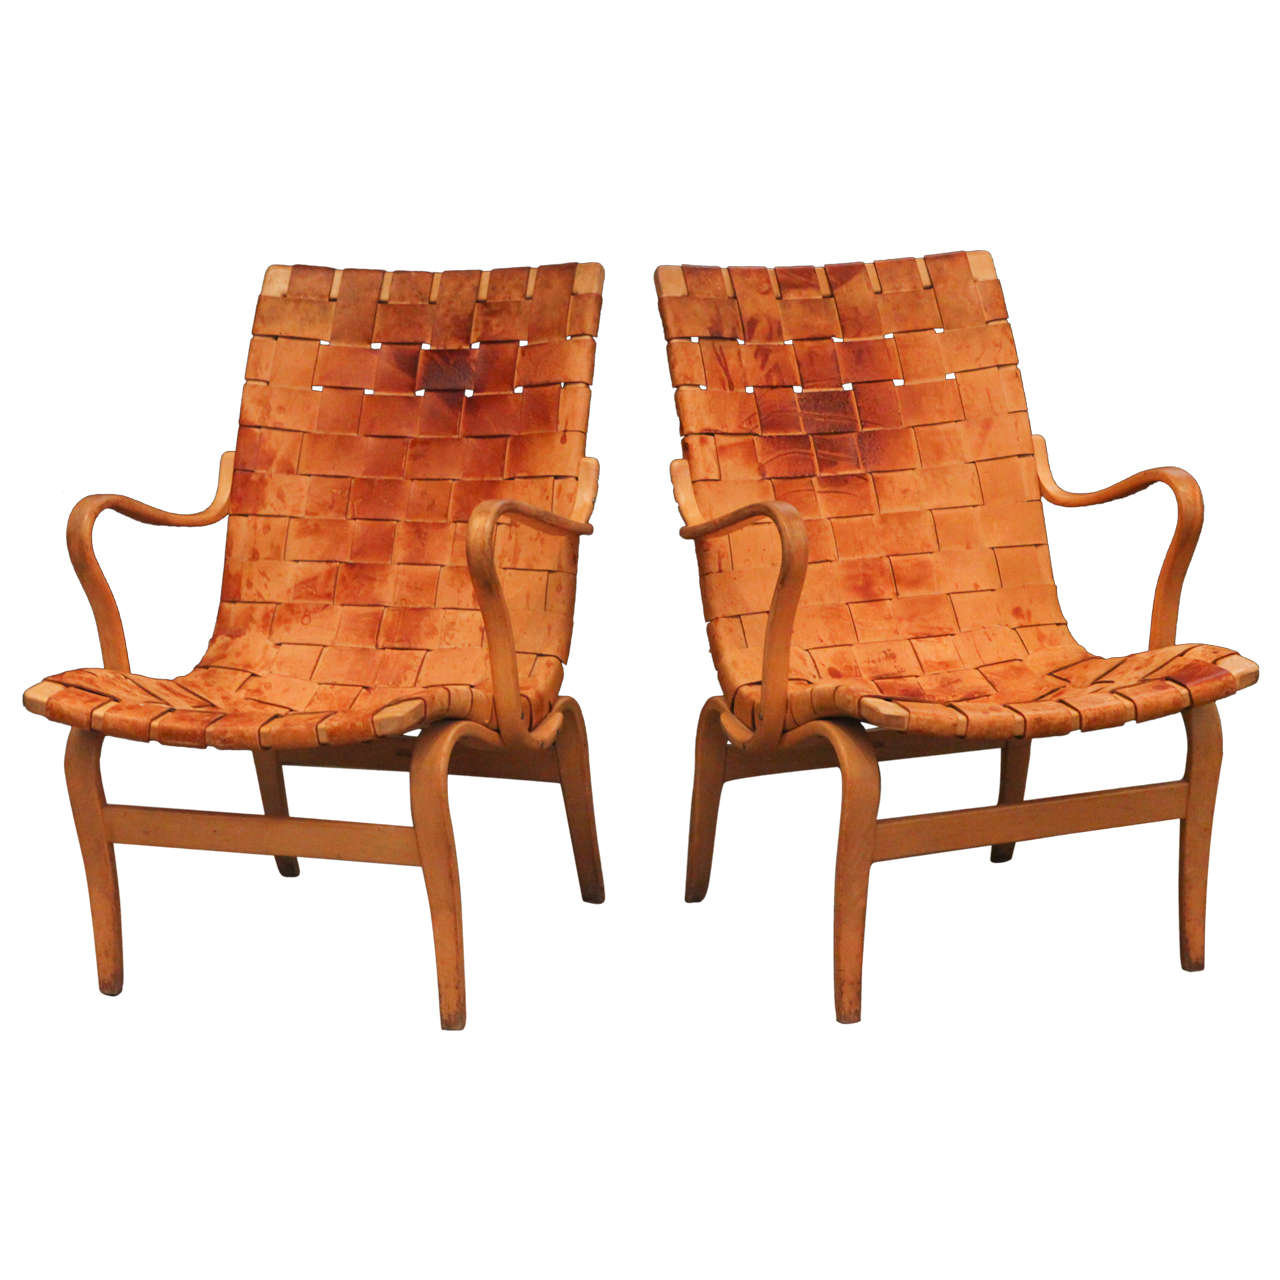 Pair of Bruno Mathsson Eva Chairs, Sweden, 1965